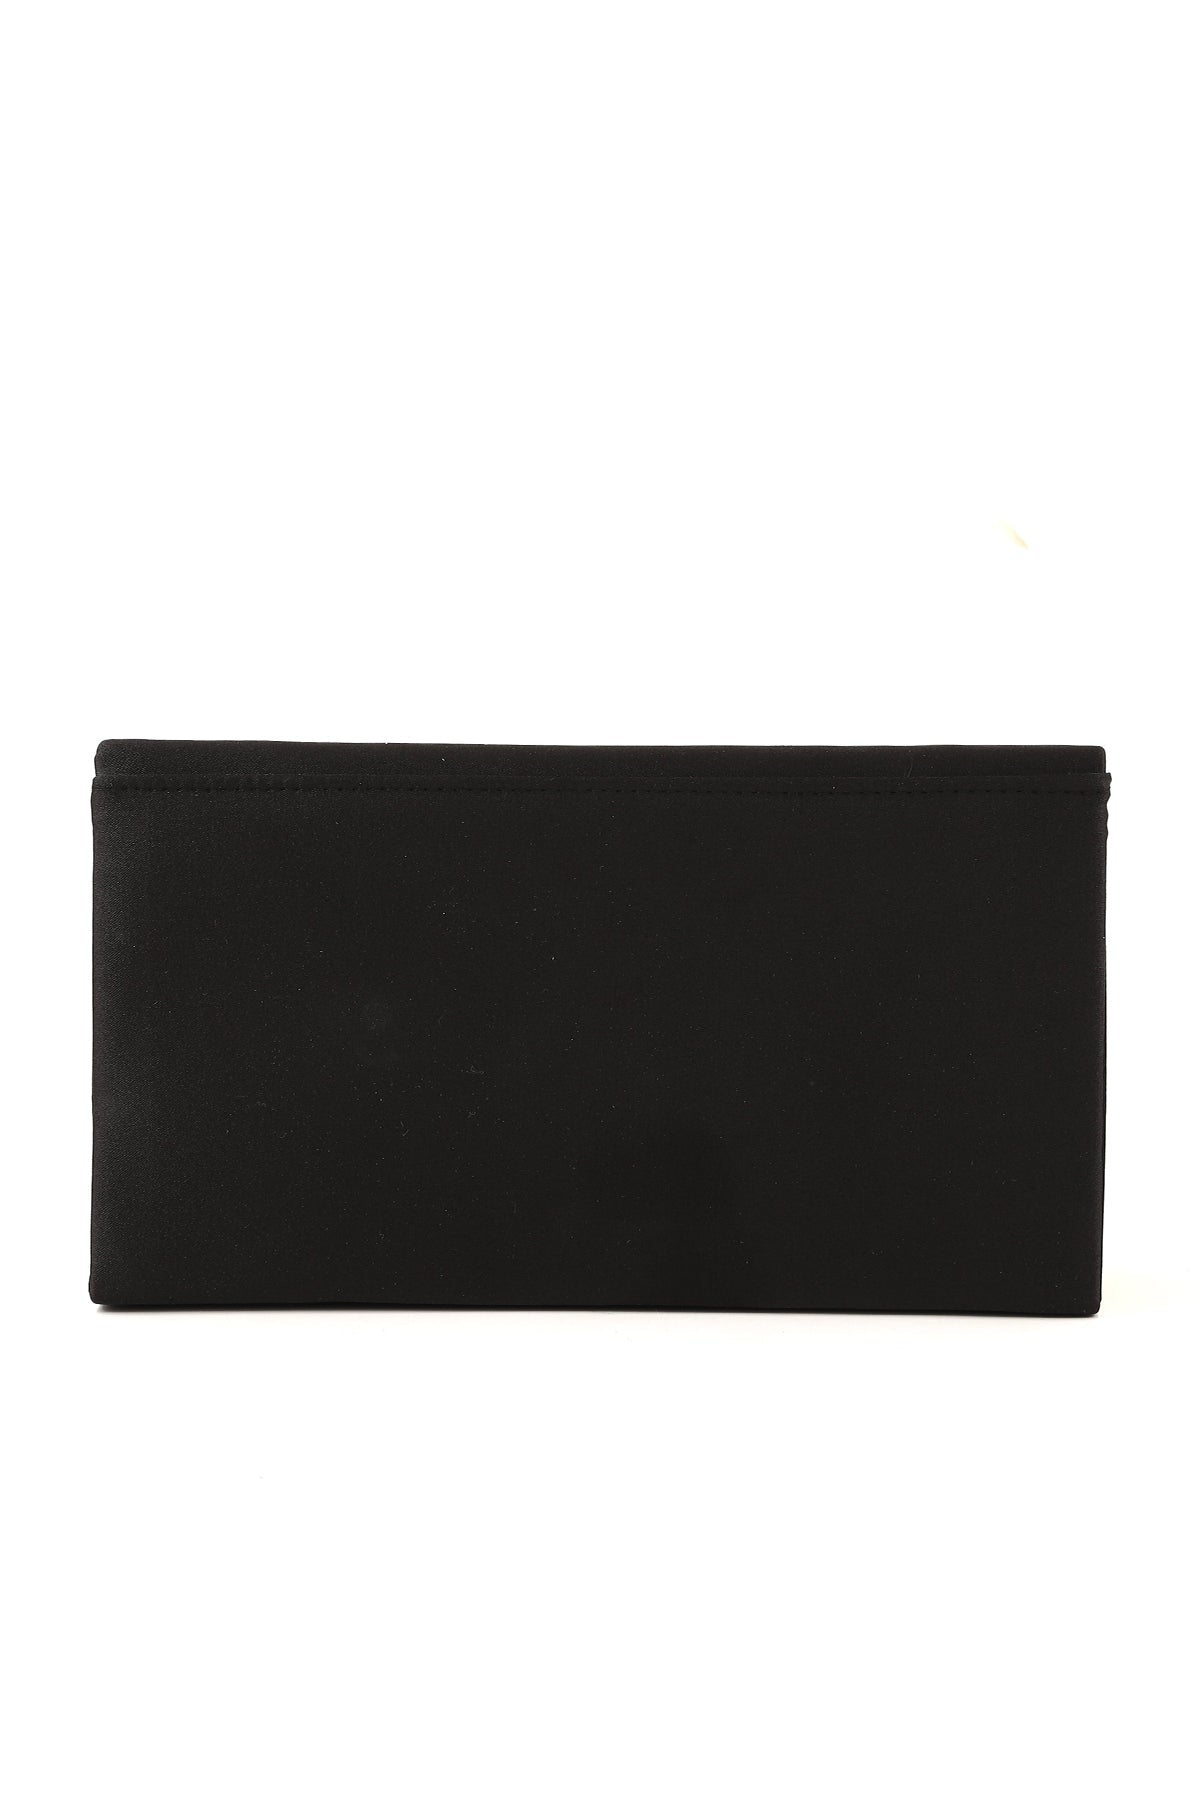 Flap Shoulder Bags B21583-Black